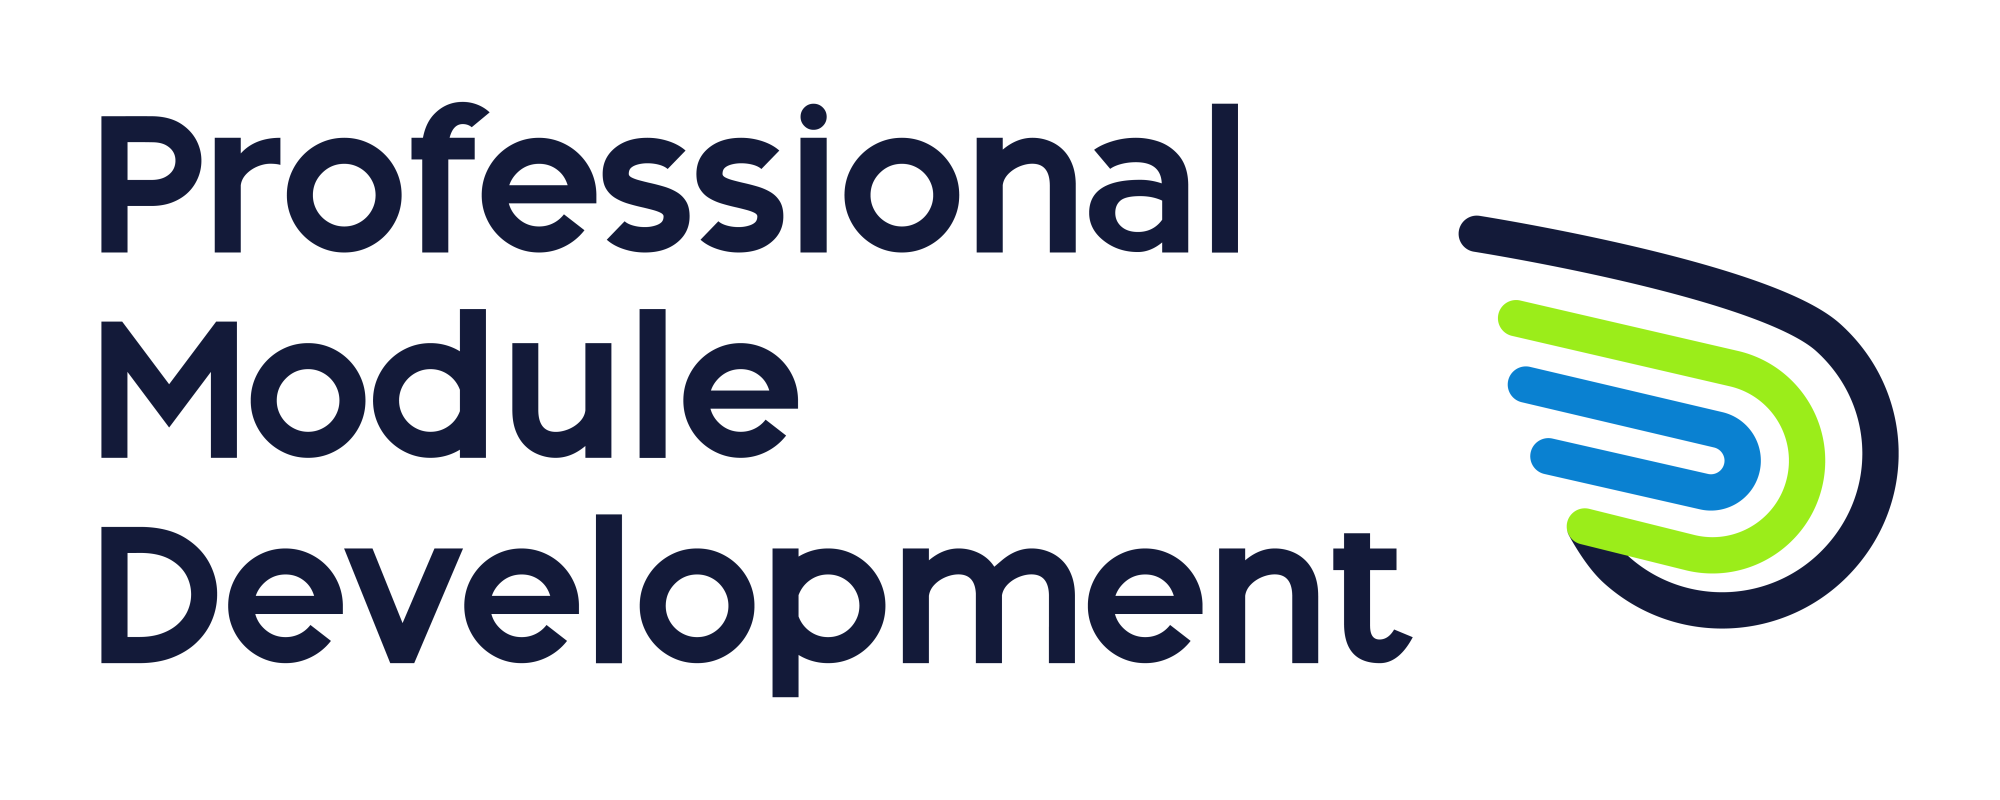 Professional Module Development    